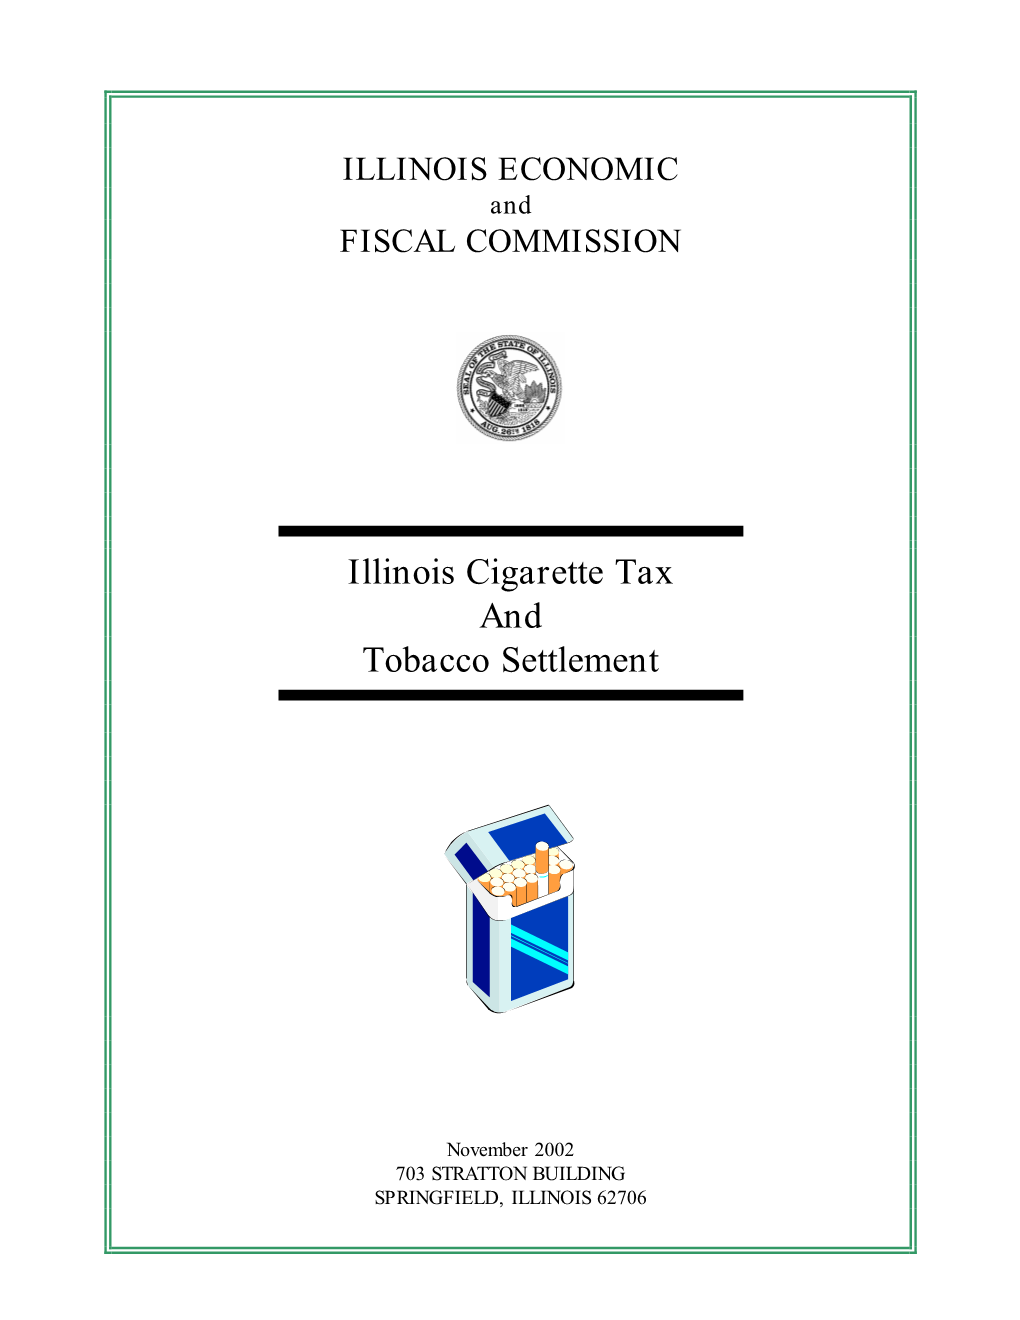 Illinois Cigarette Tax and Tobacco Settlement